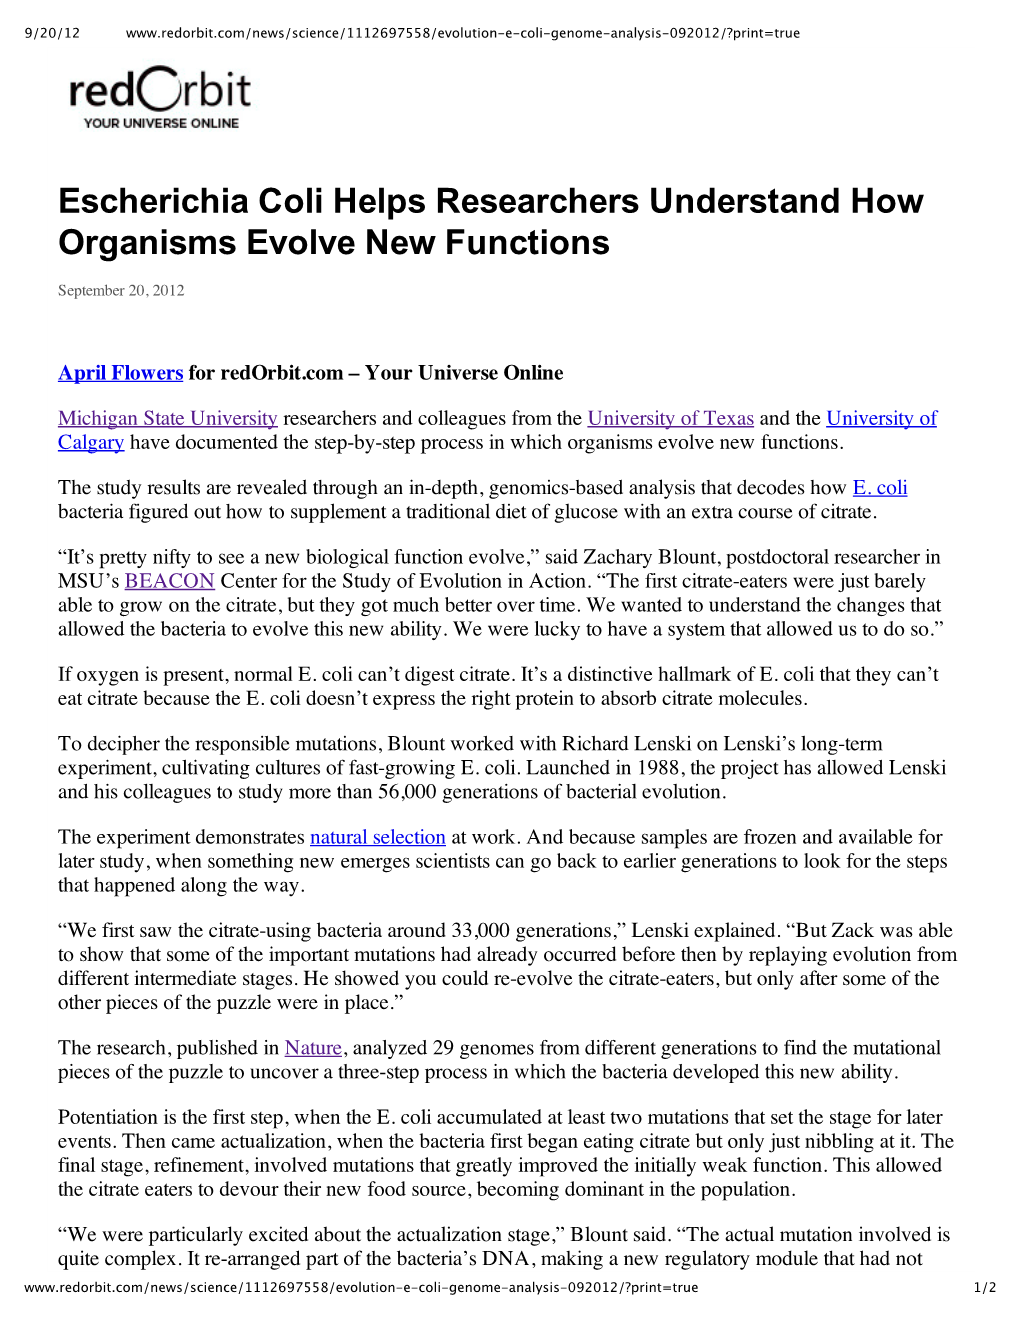 Escherichia Coli Helps Researchers Understand How Organisms Evolve New Functions